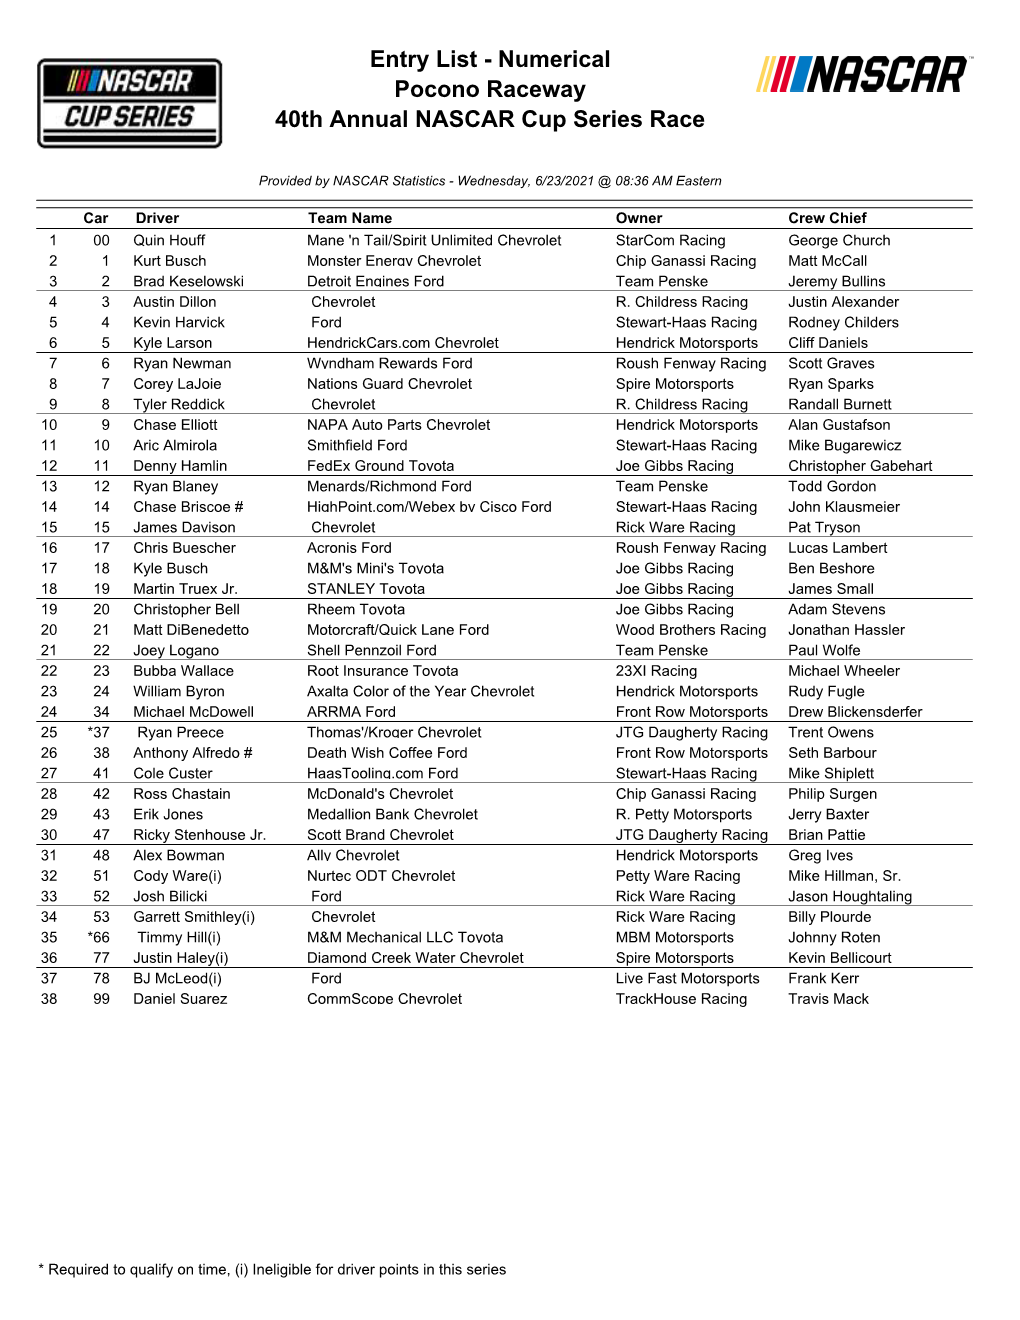 Entry List - Numerical Pocono Raceway 40Th Annual NASCAR Cup Series Race